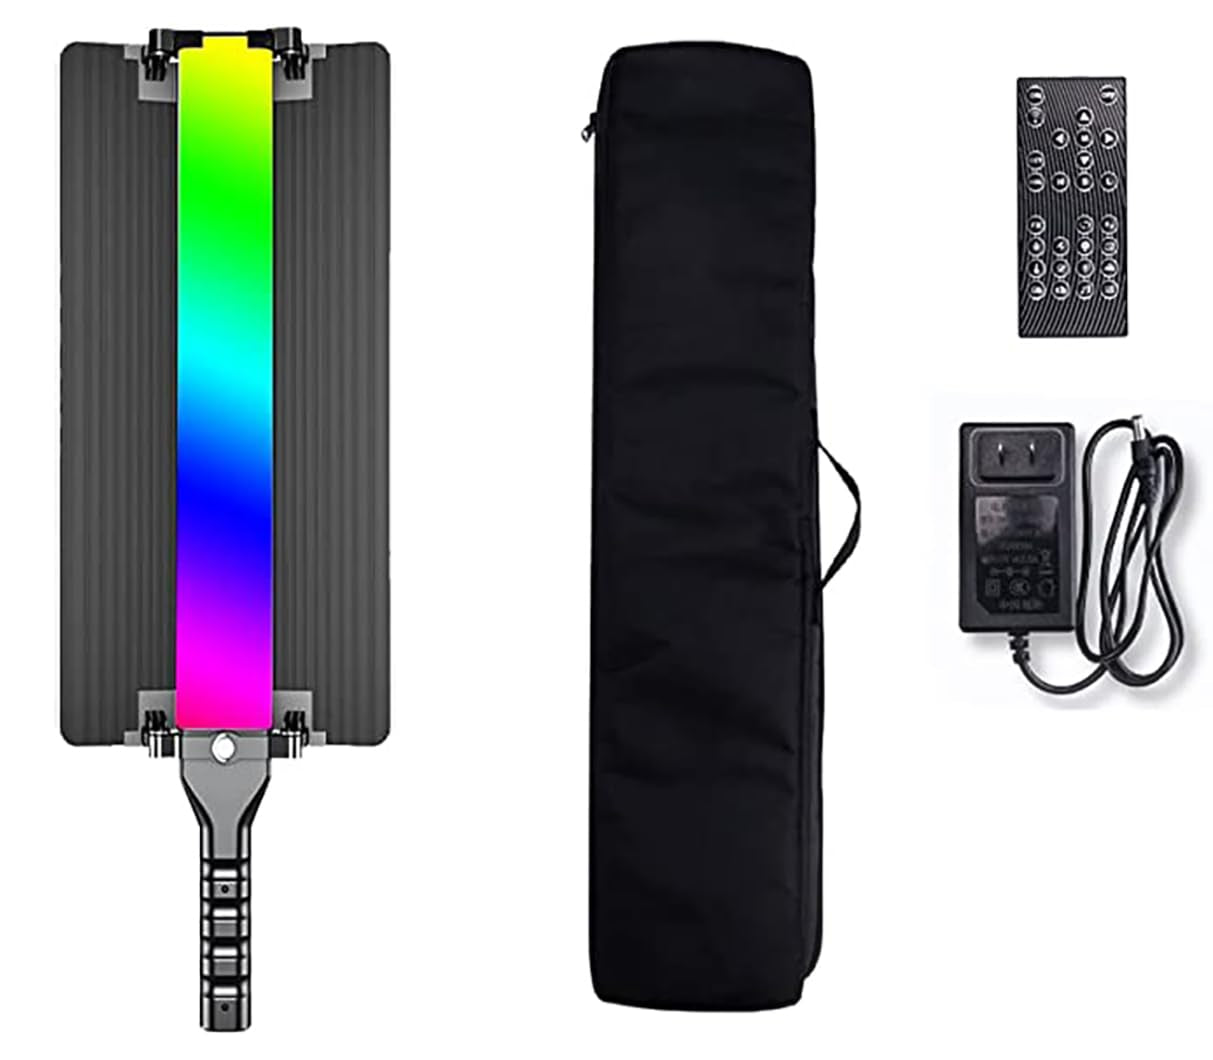 RGB Light Stick R1000